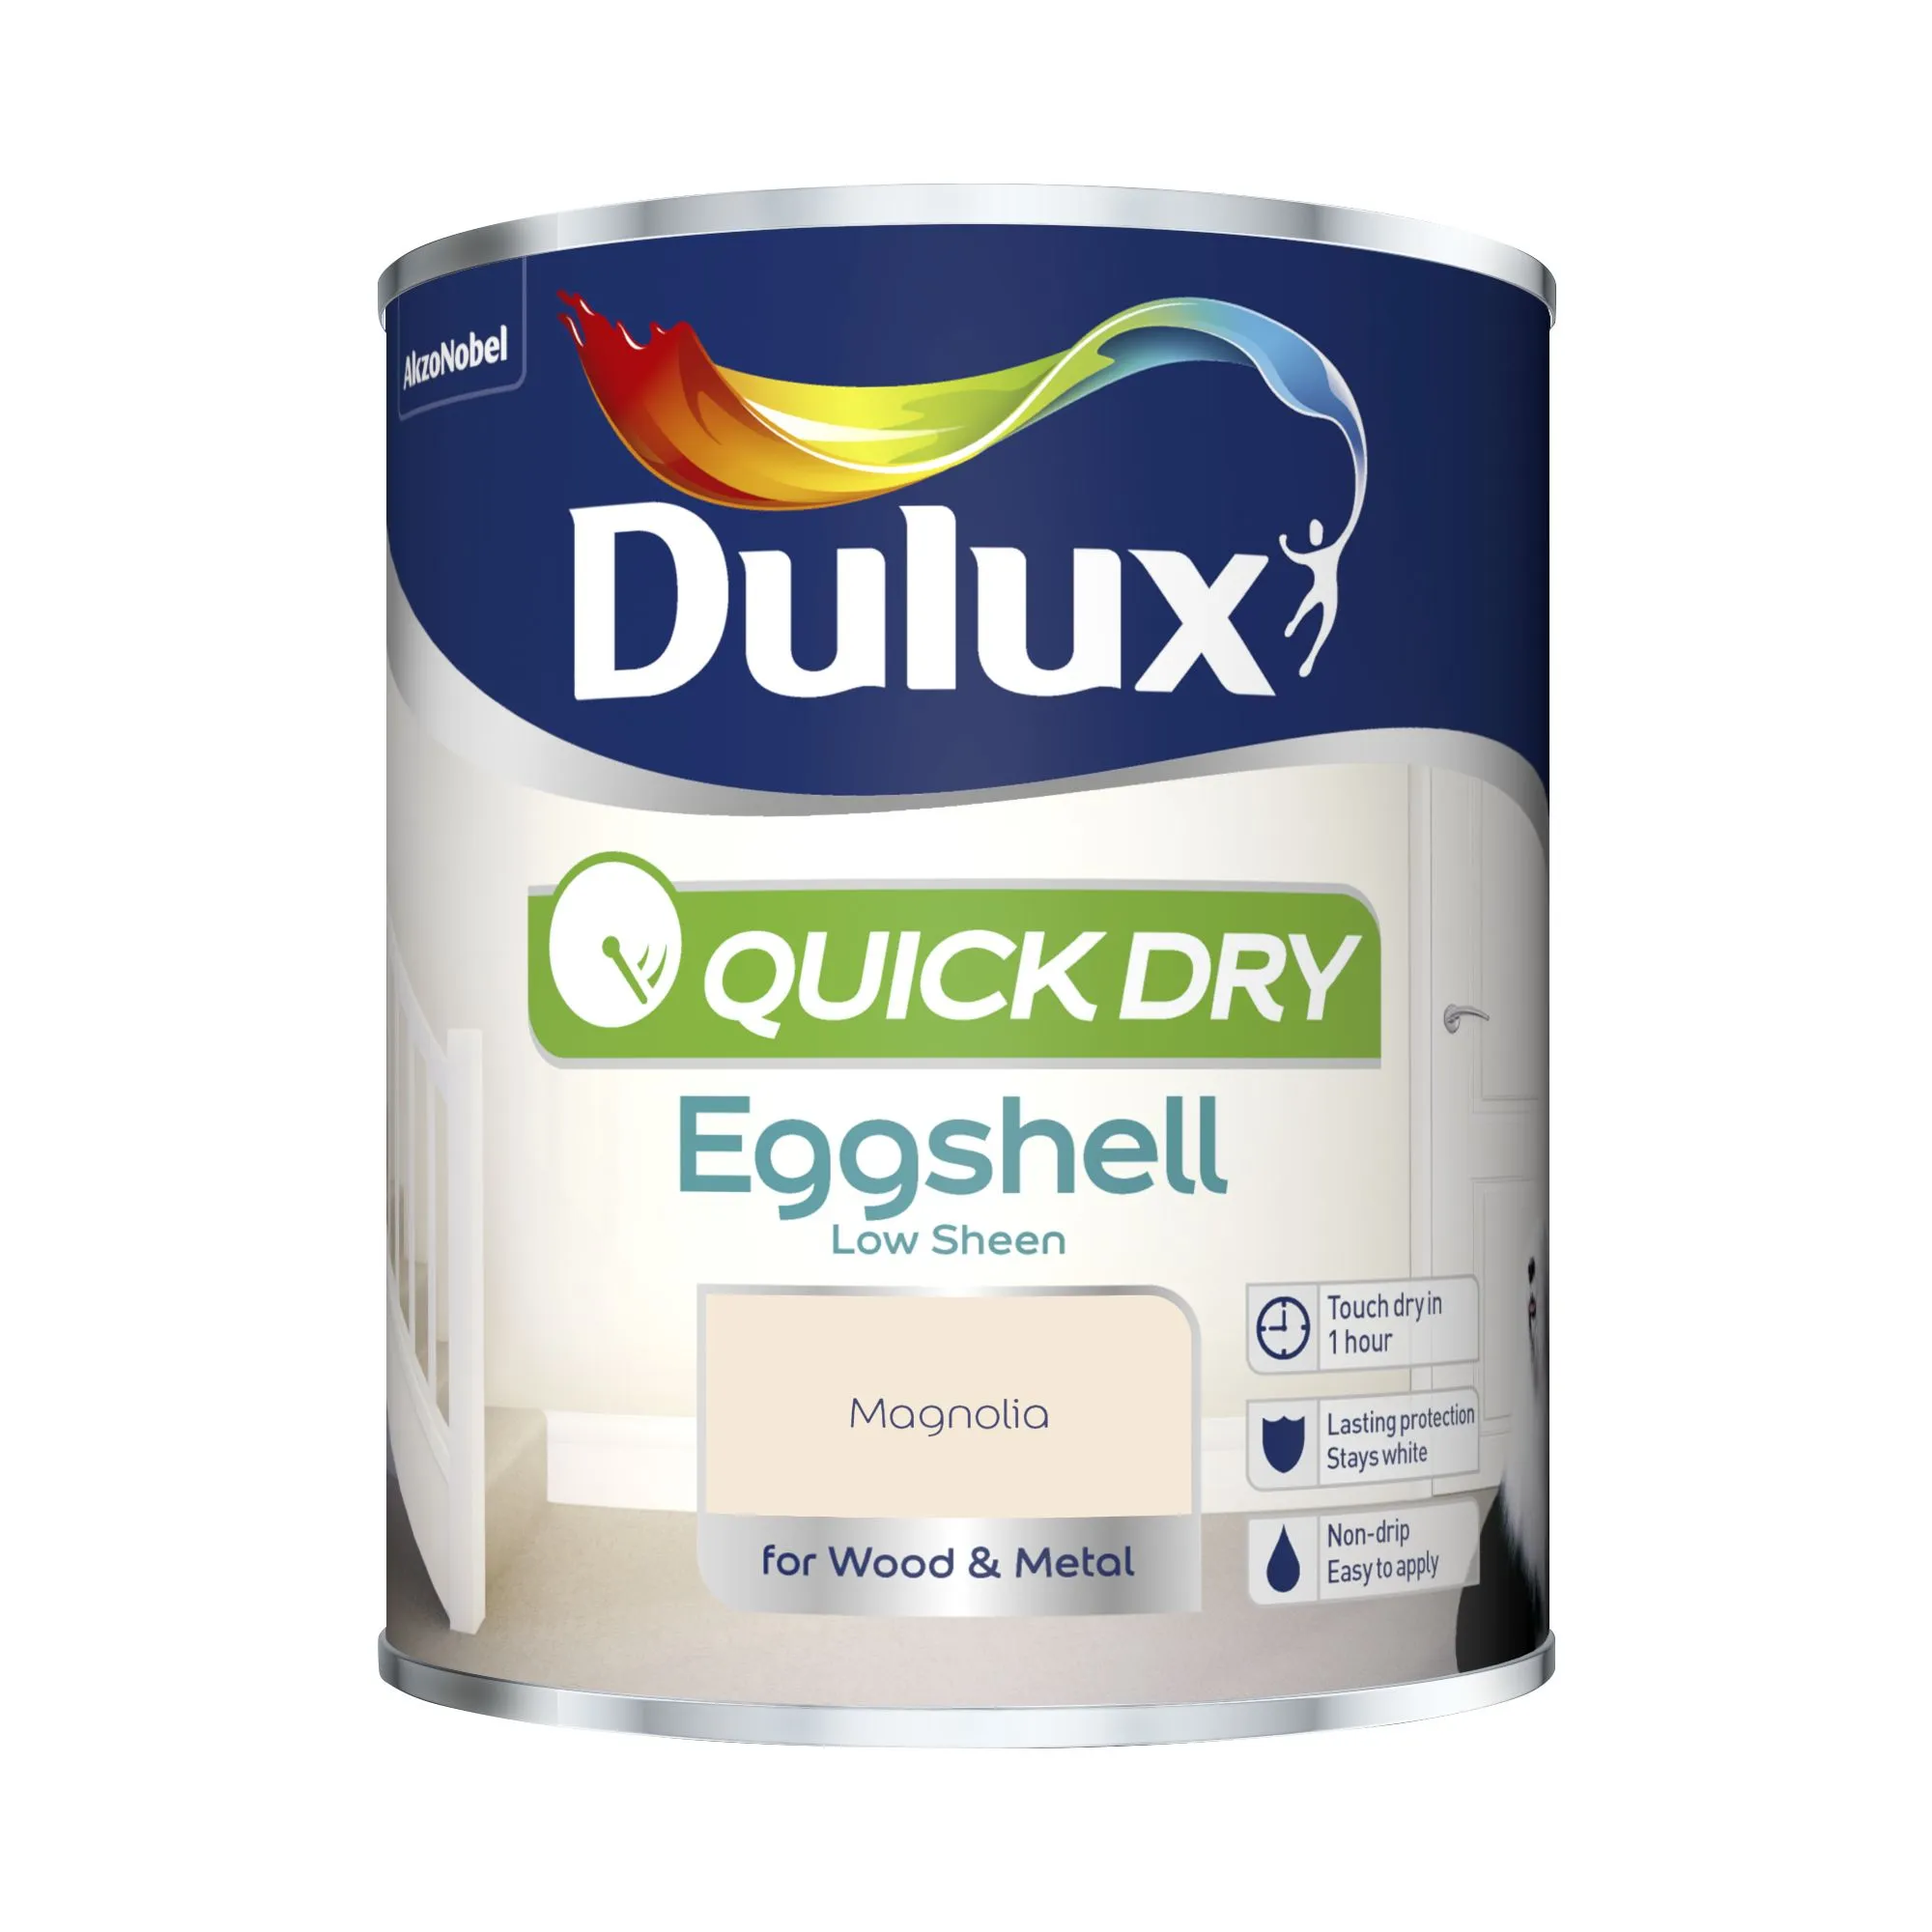 Dulux Quick dry Magnolia Eggshell Metal & wood paint, 0.75L